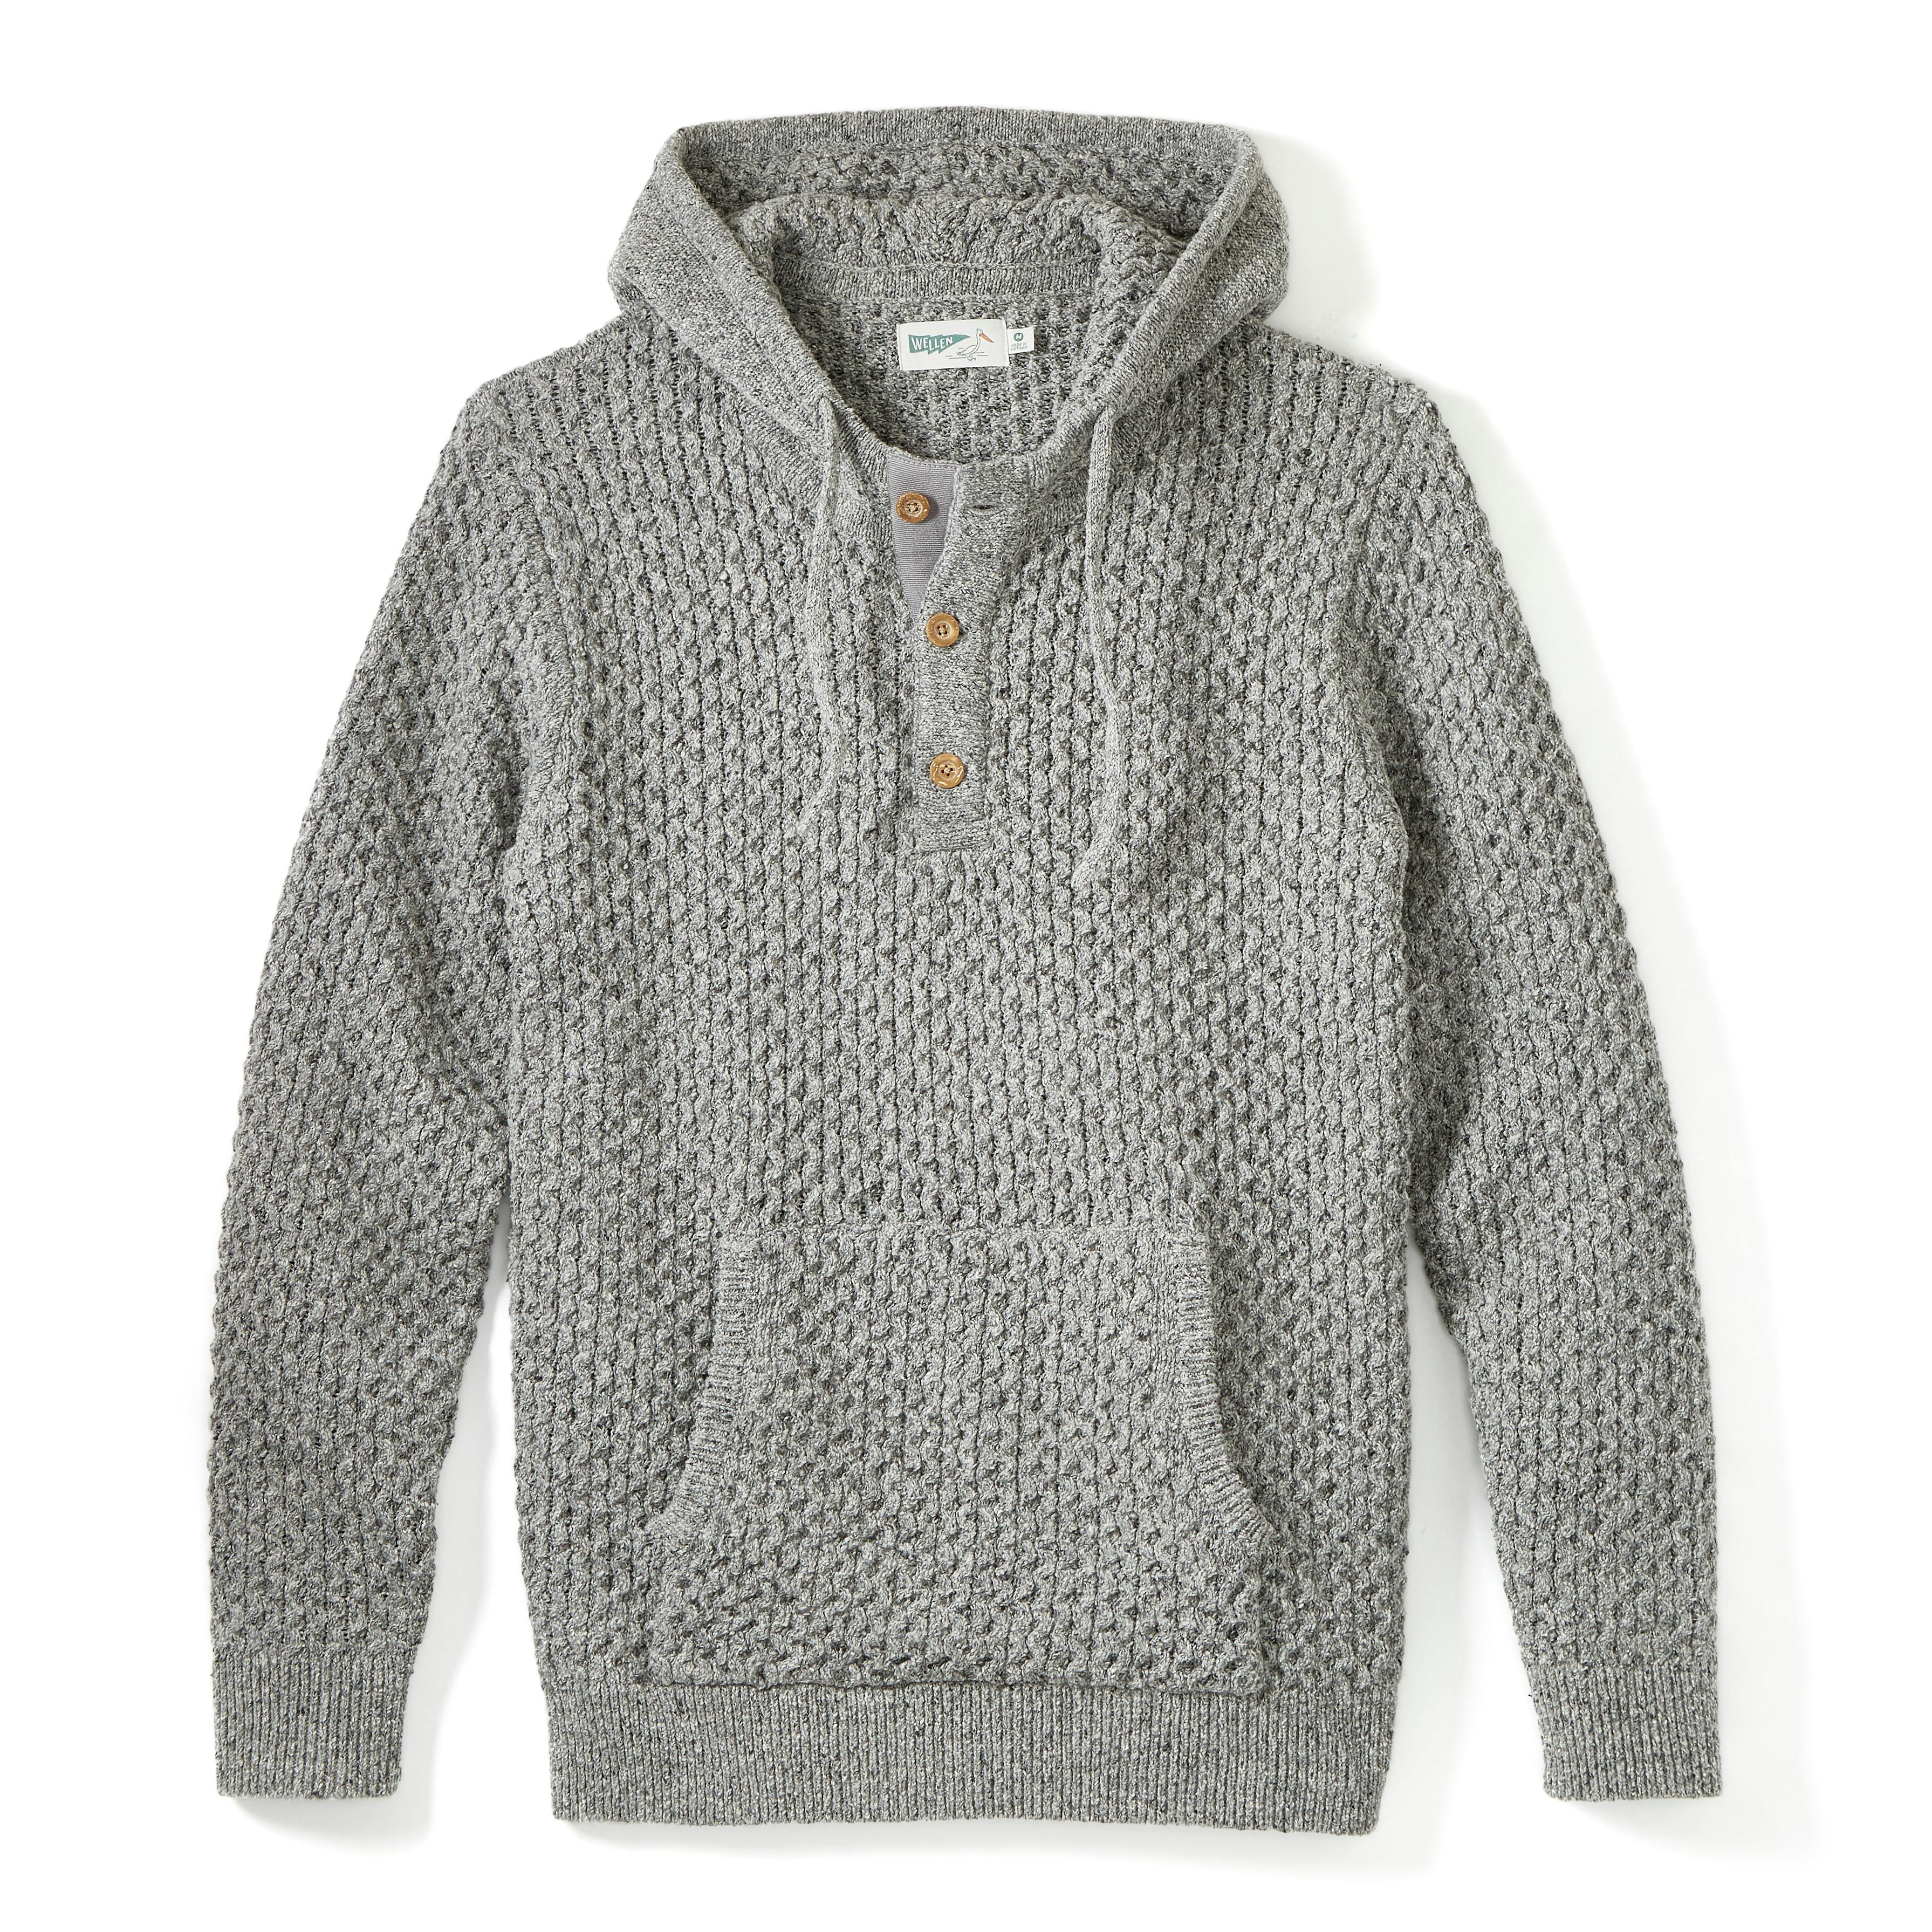 Headlands Knit Poncho Sweater